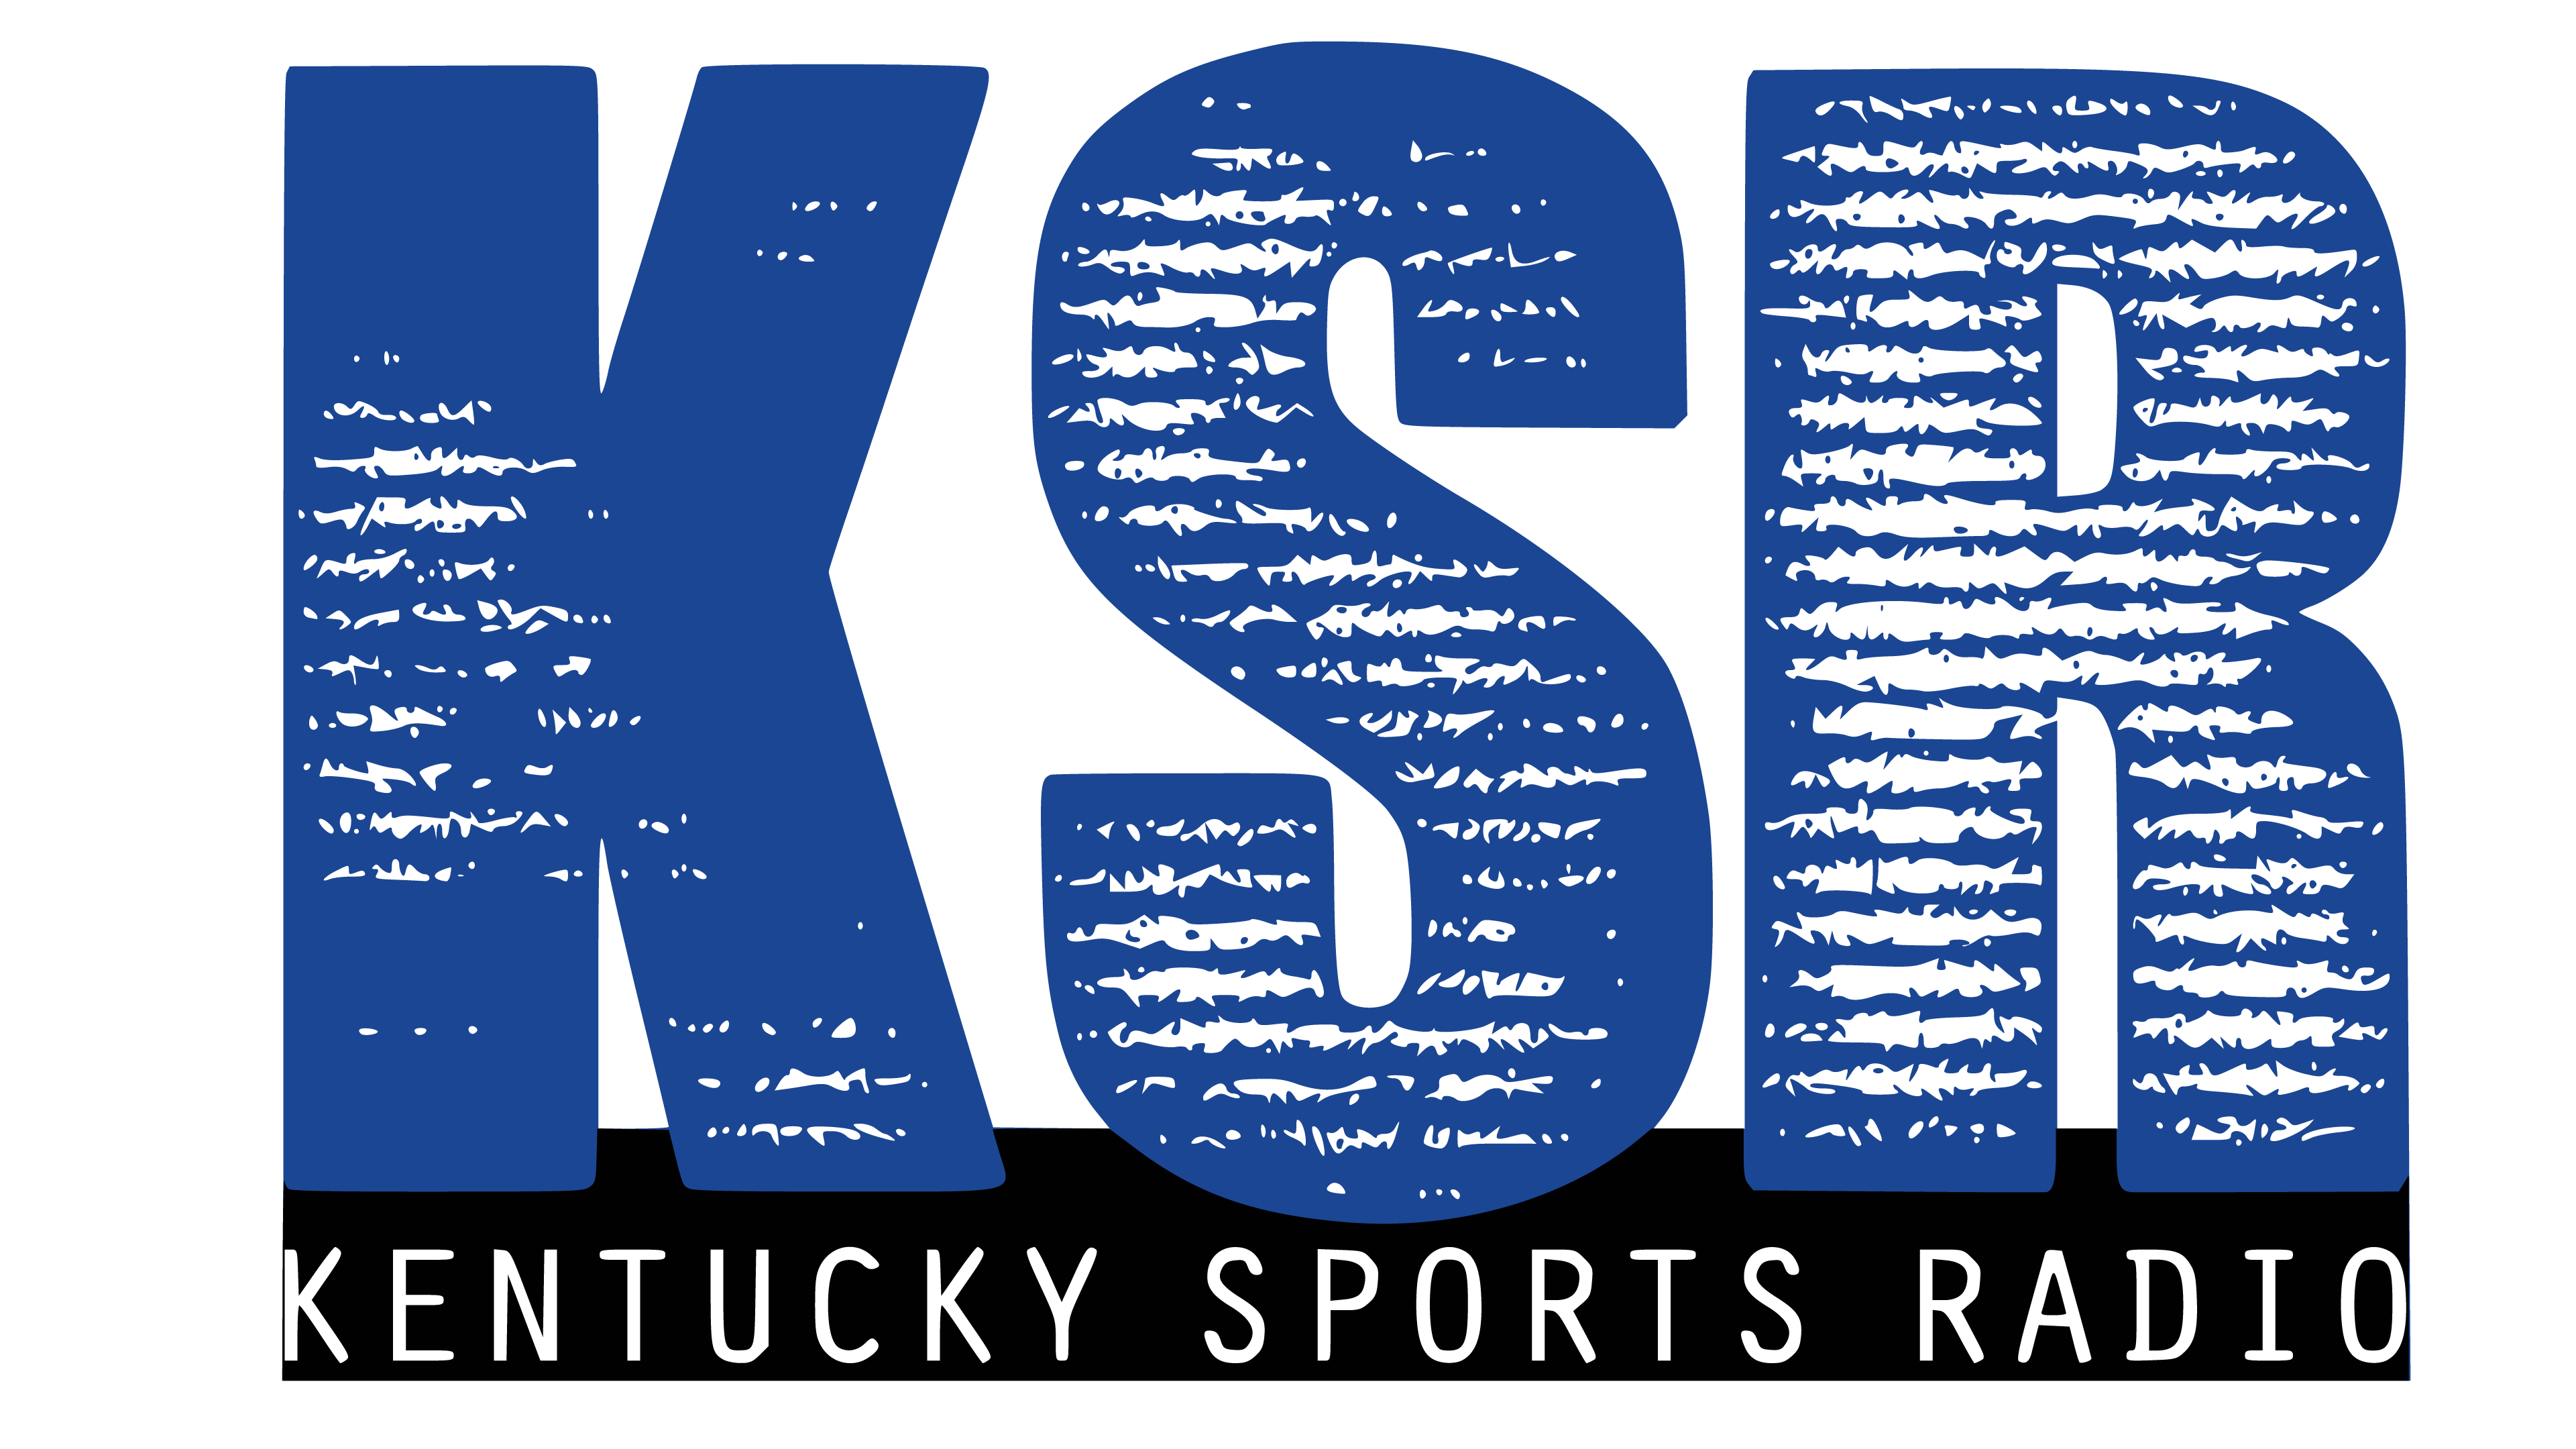 Kentucky Sports Radio NewsRadio 630 WLAP